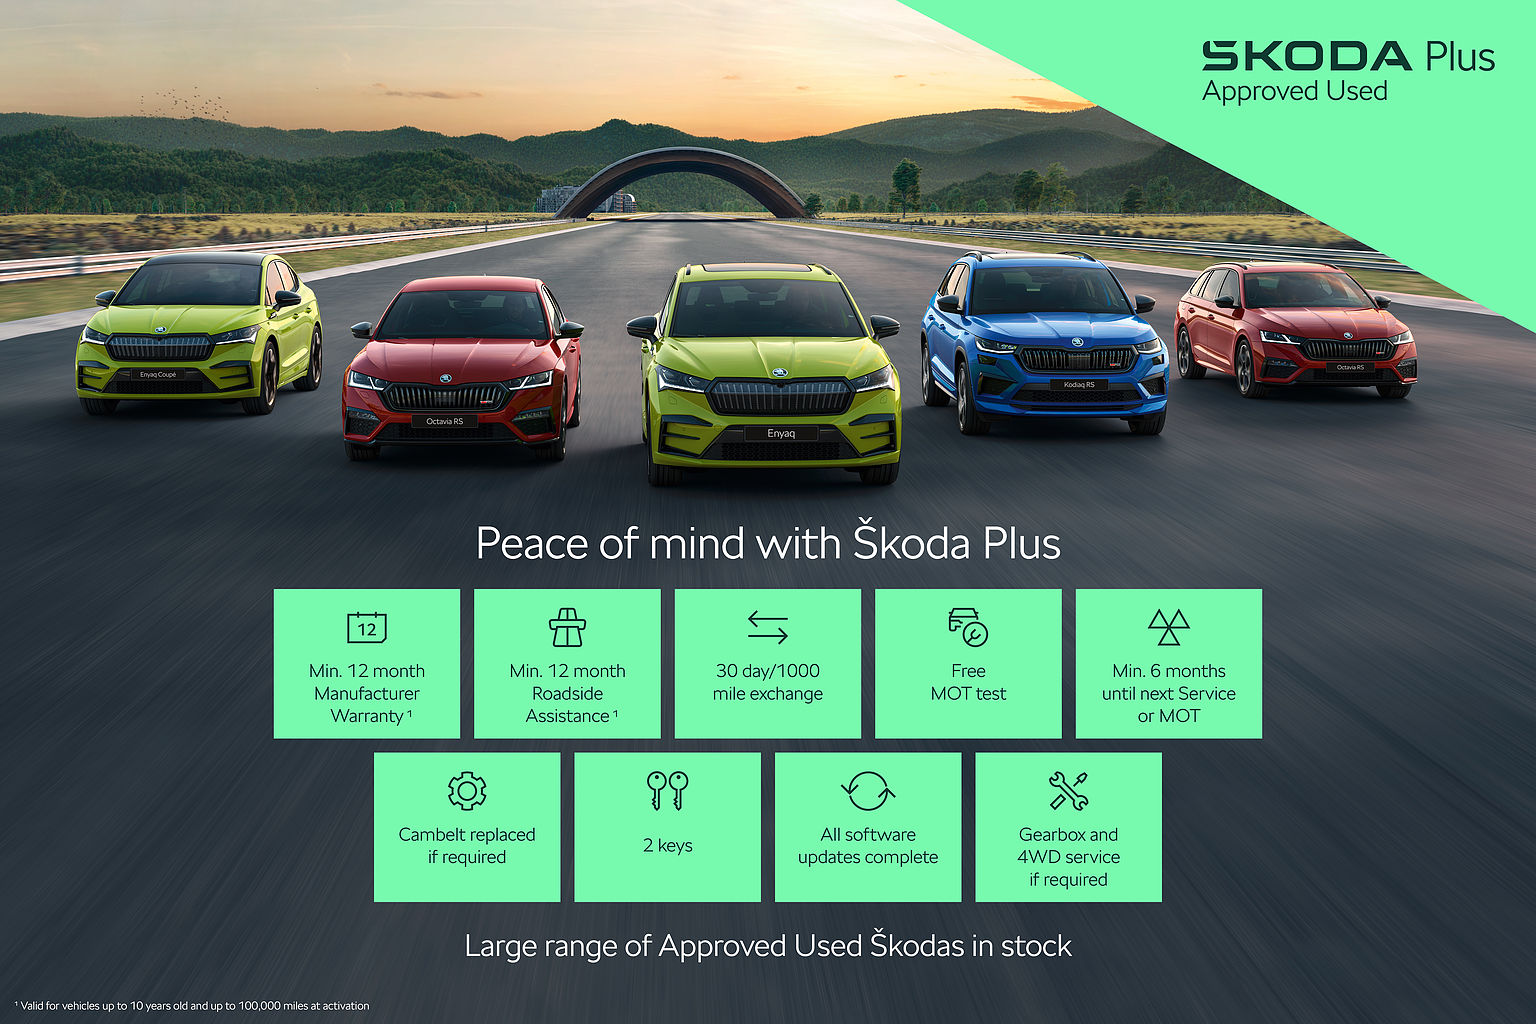 SKODA Fabia 1.0 MPI (80ps) Colour Edition 5-Dr Hatchback